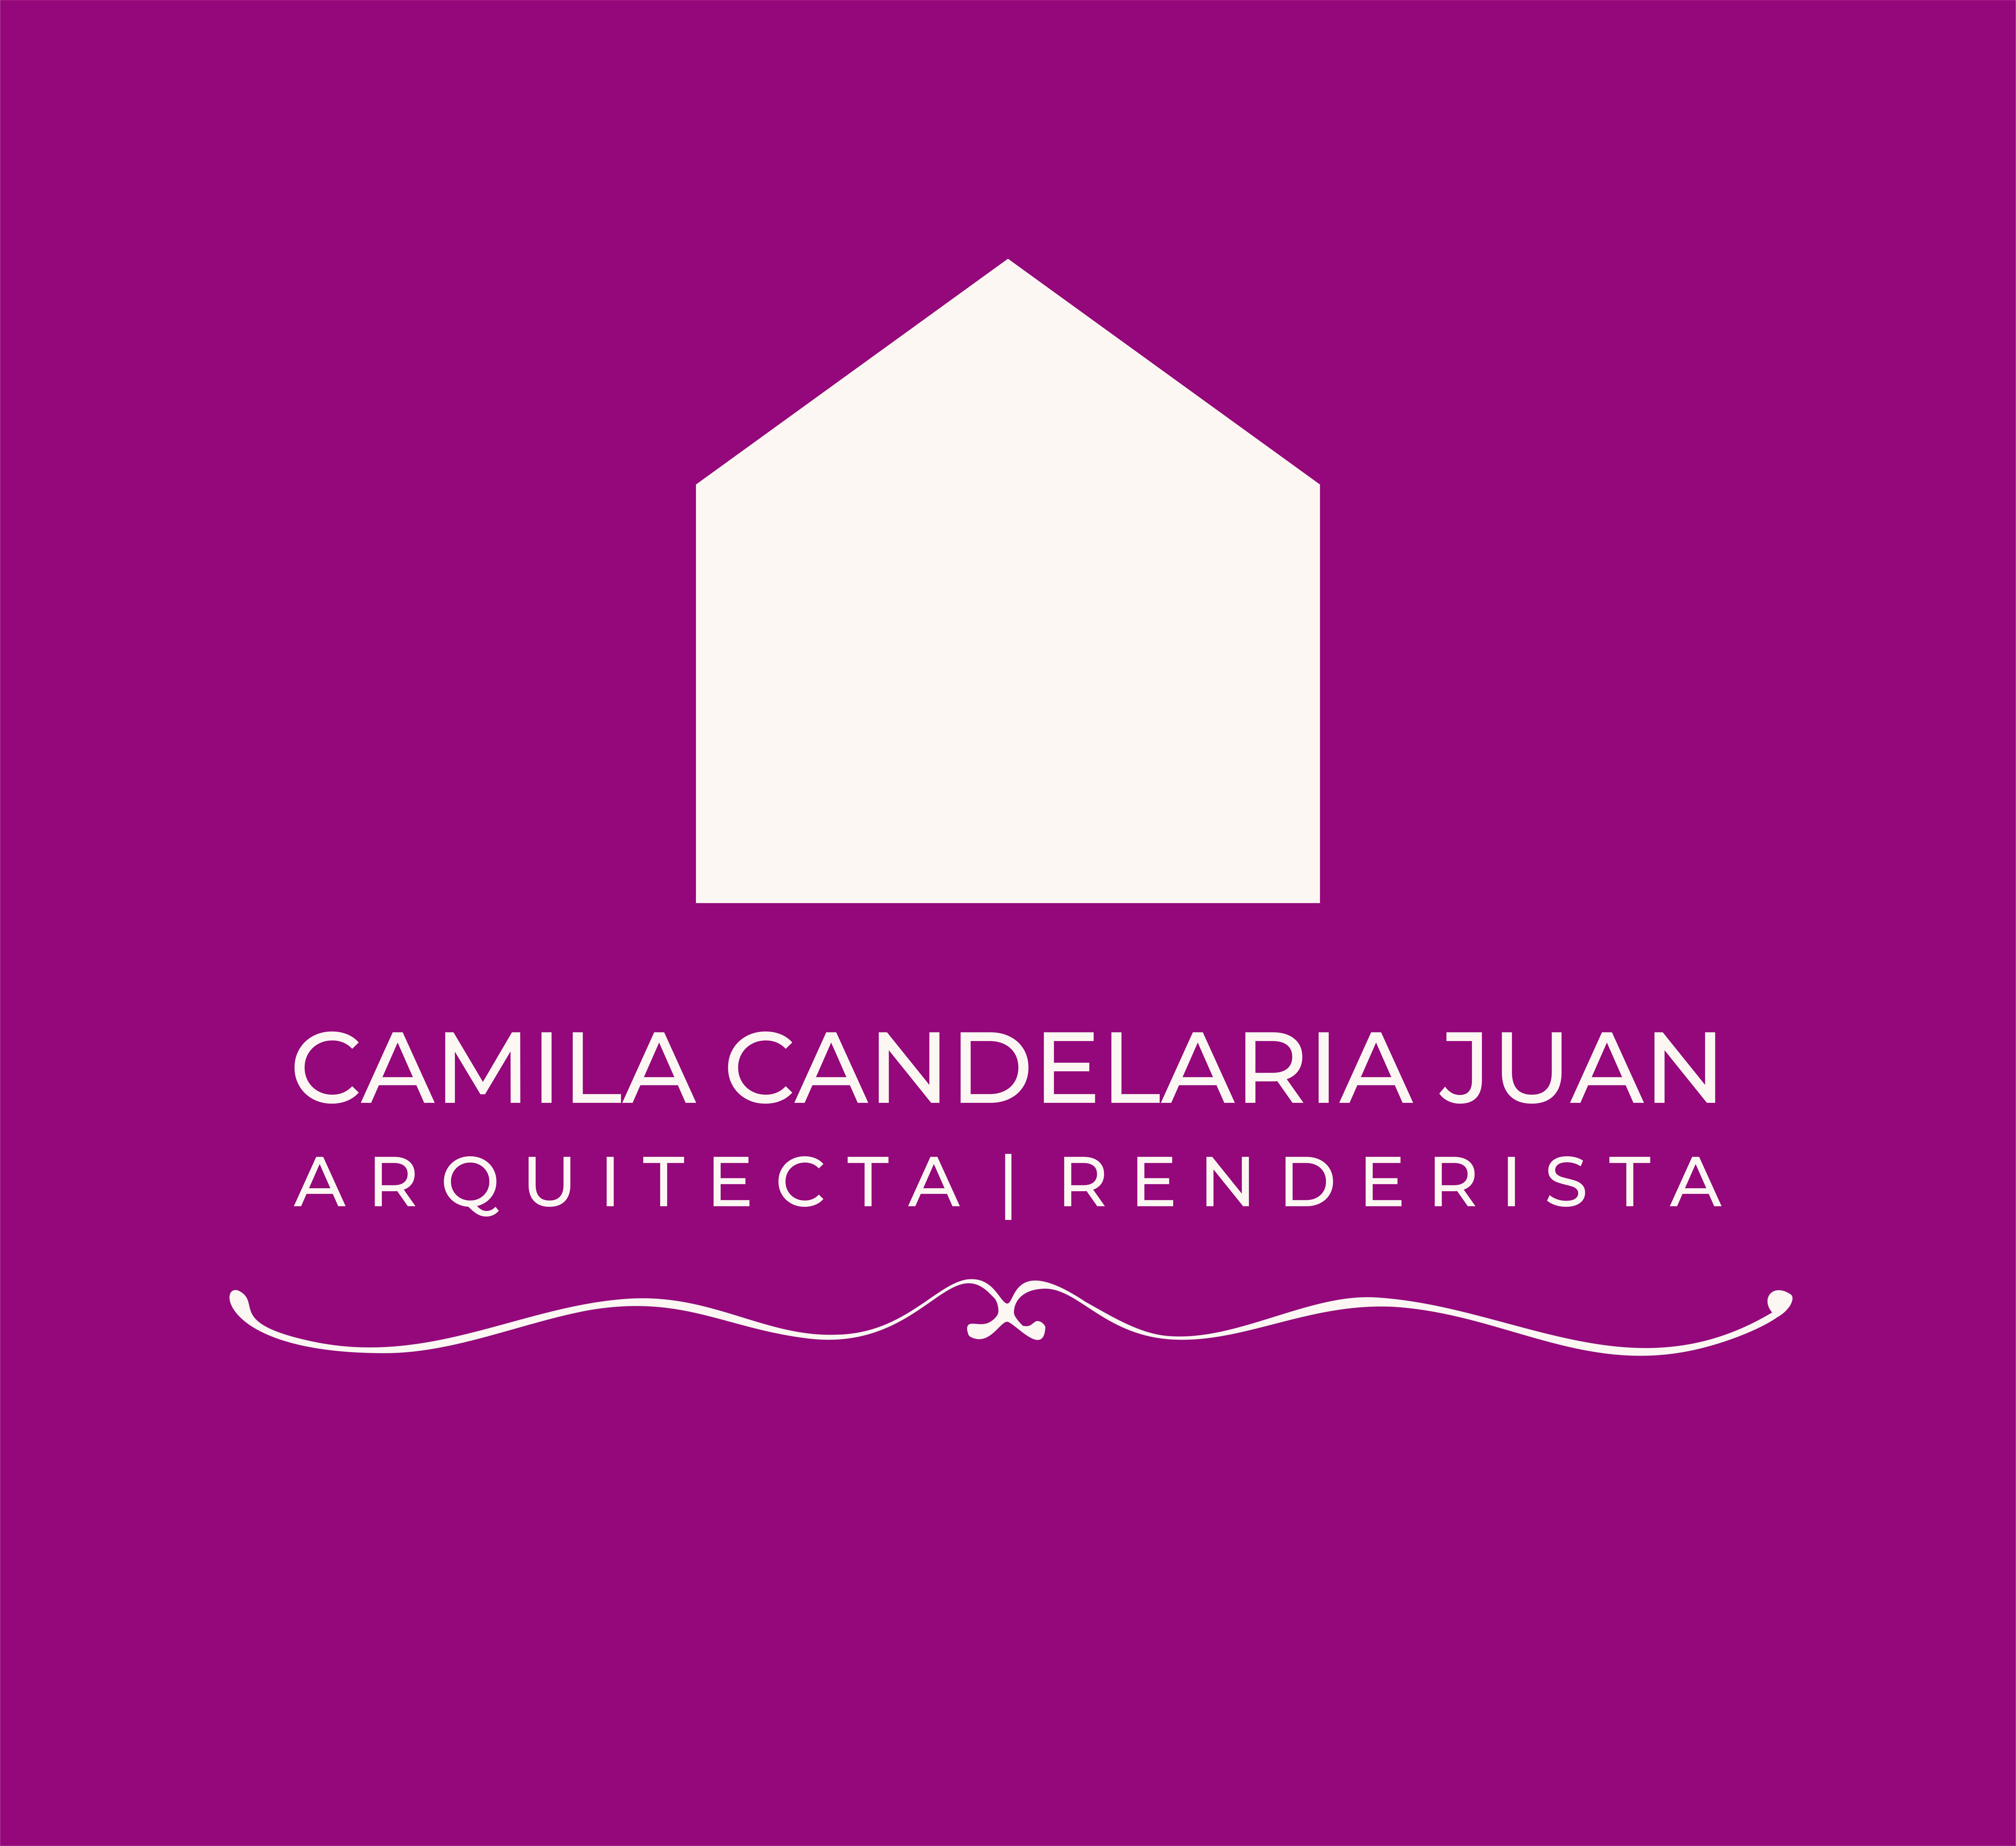 Arq. Camila Candelaria Juan